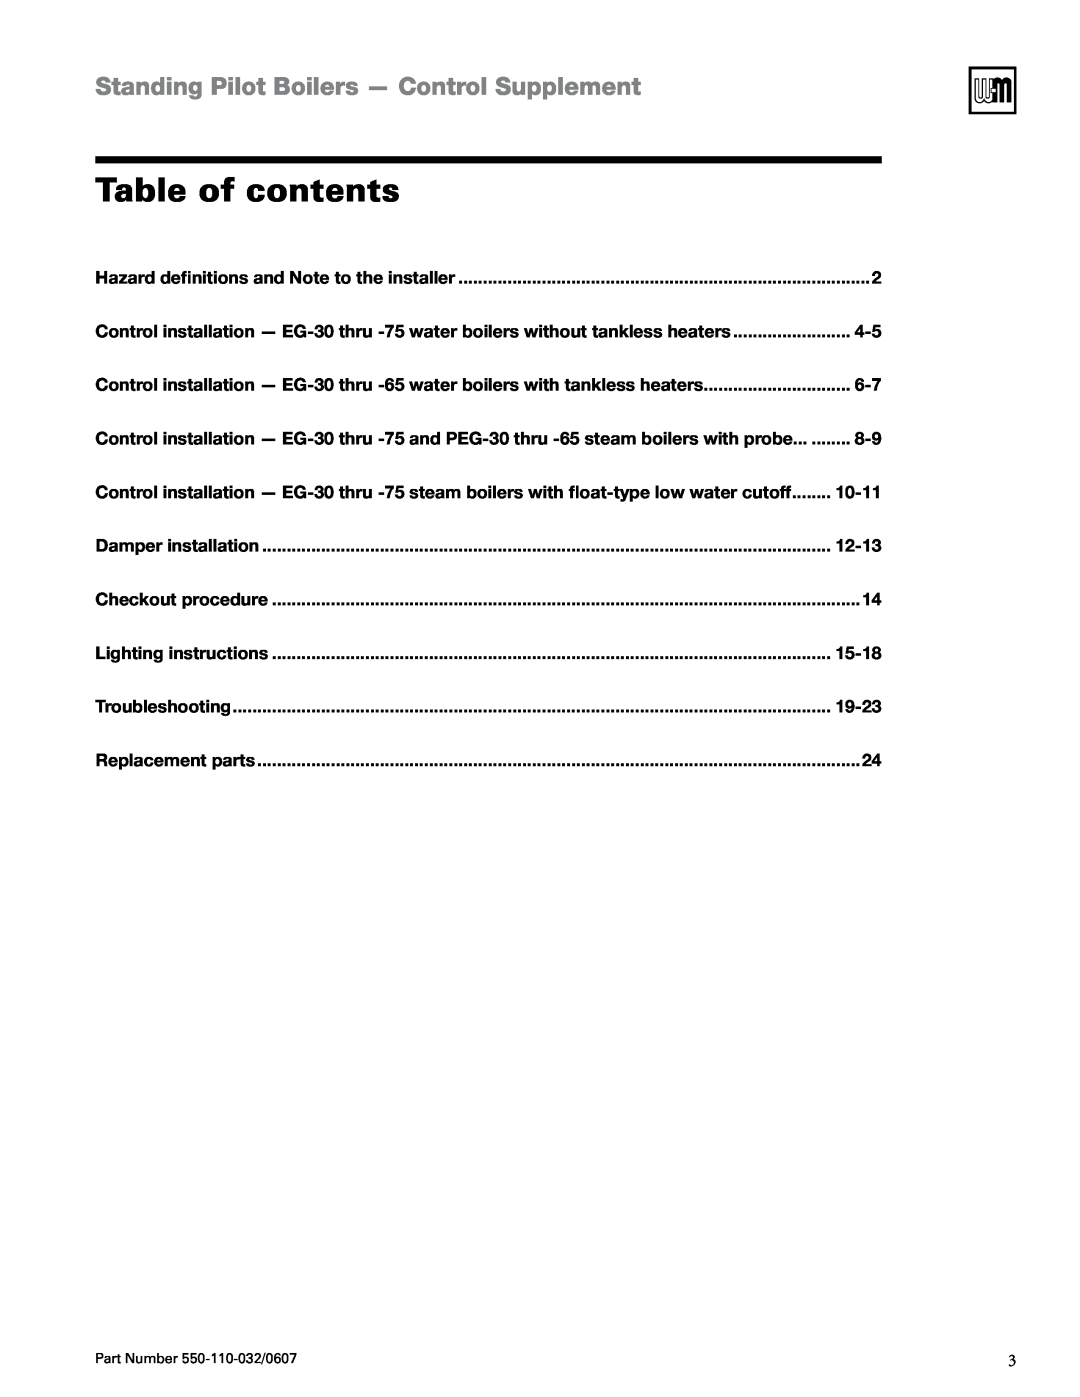 Weil-McLain EG-30 THRU -75 Table of contents, Standing Pilot Boilers - Control Supplement, 10-11, 12-13, 15-18, 19-23 